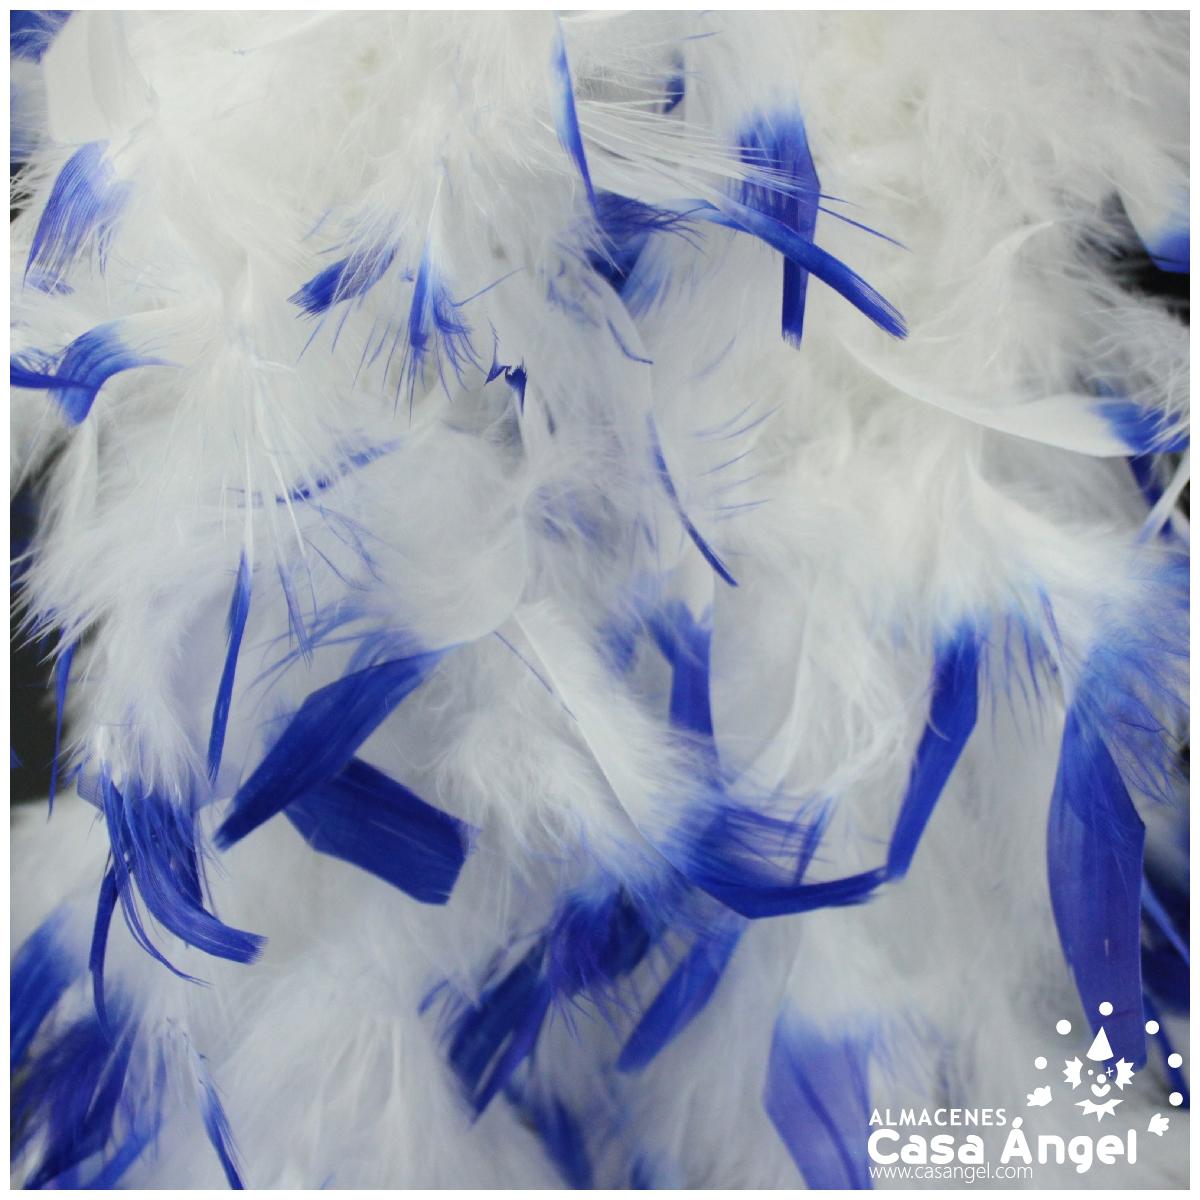 Boa de plumas azul - Menkes